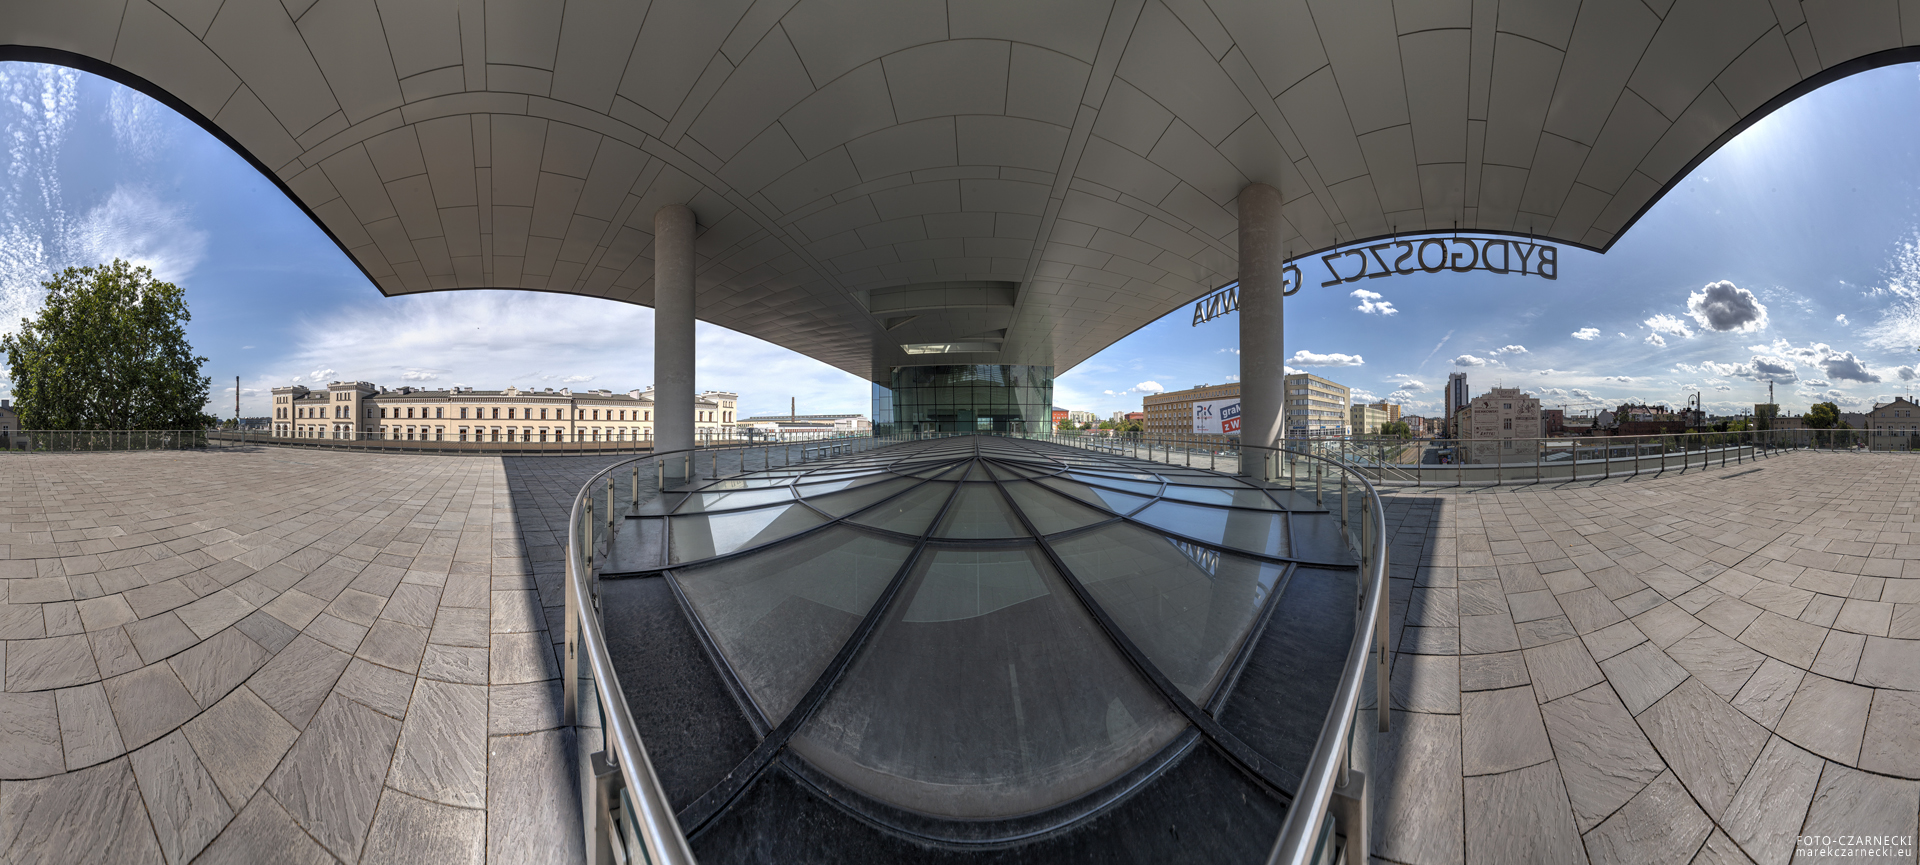 Dworzec-BDG_8255_6_7_Panorama